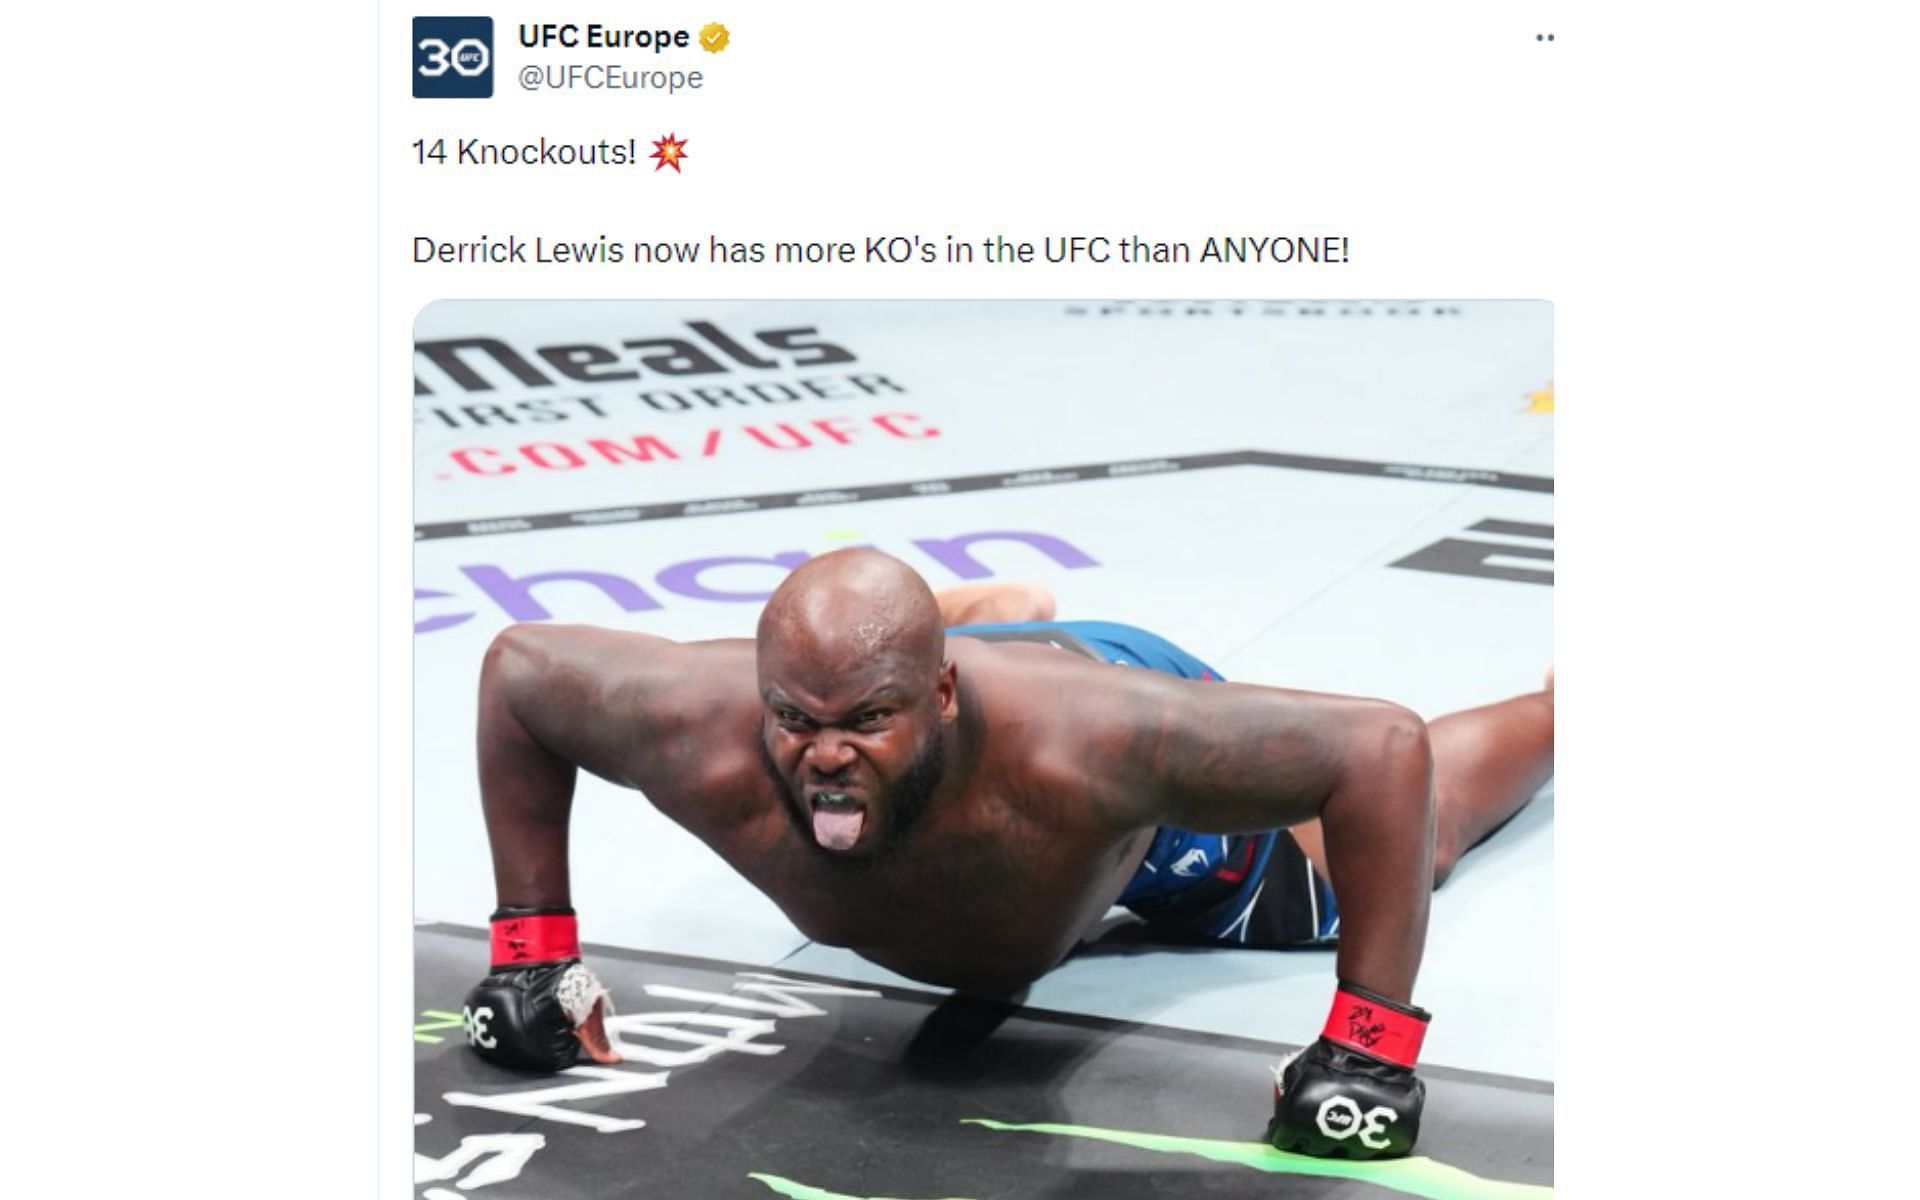 UFC Europe tweet regarding the UFC knockouts record